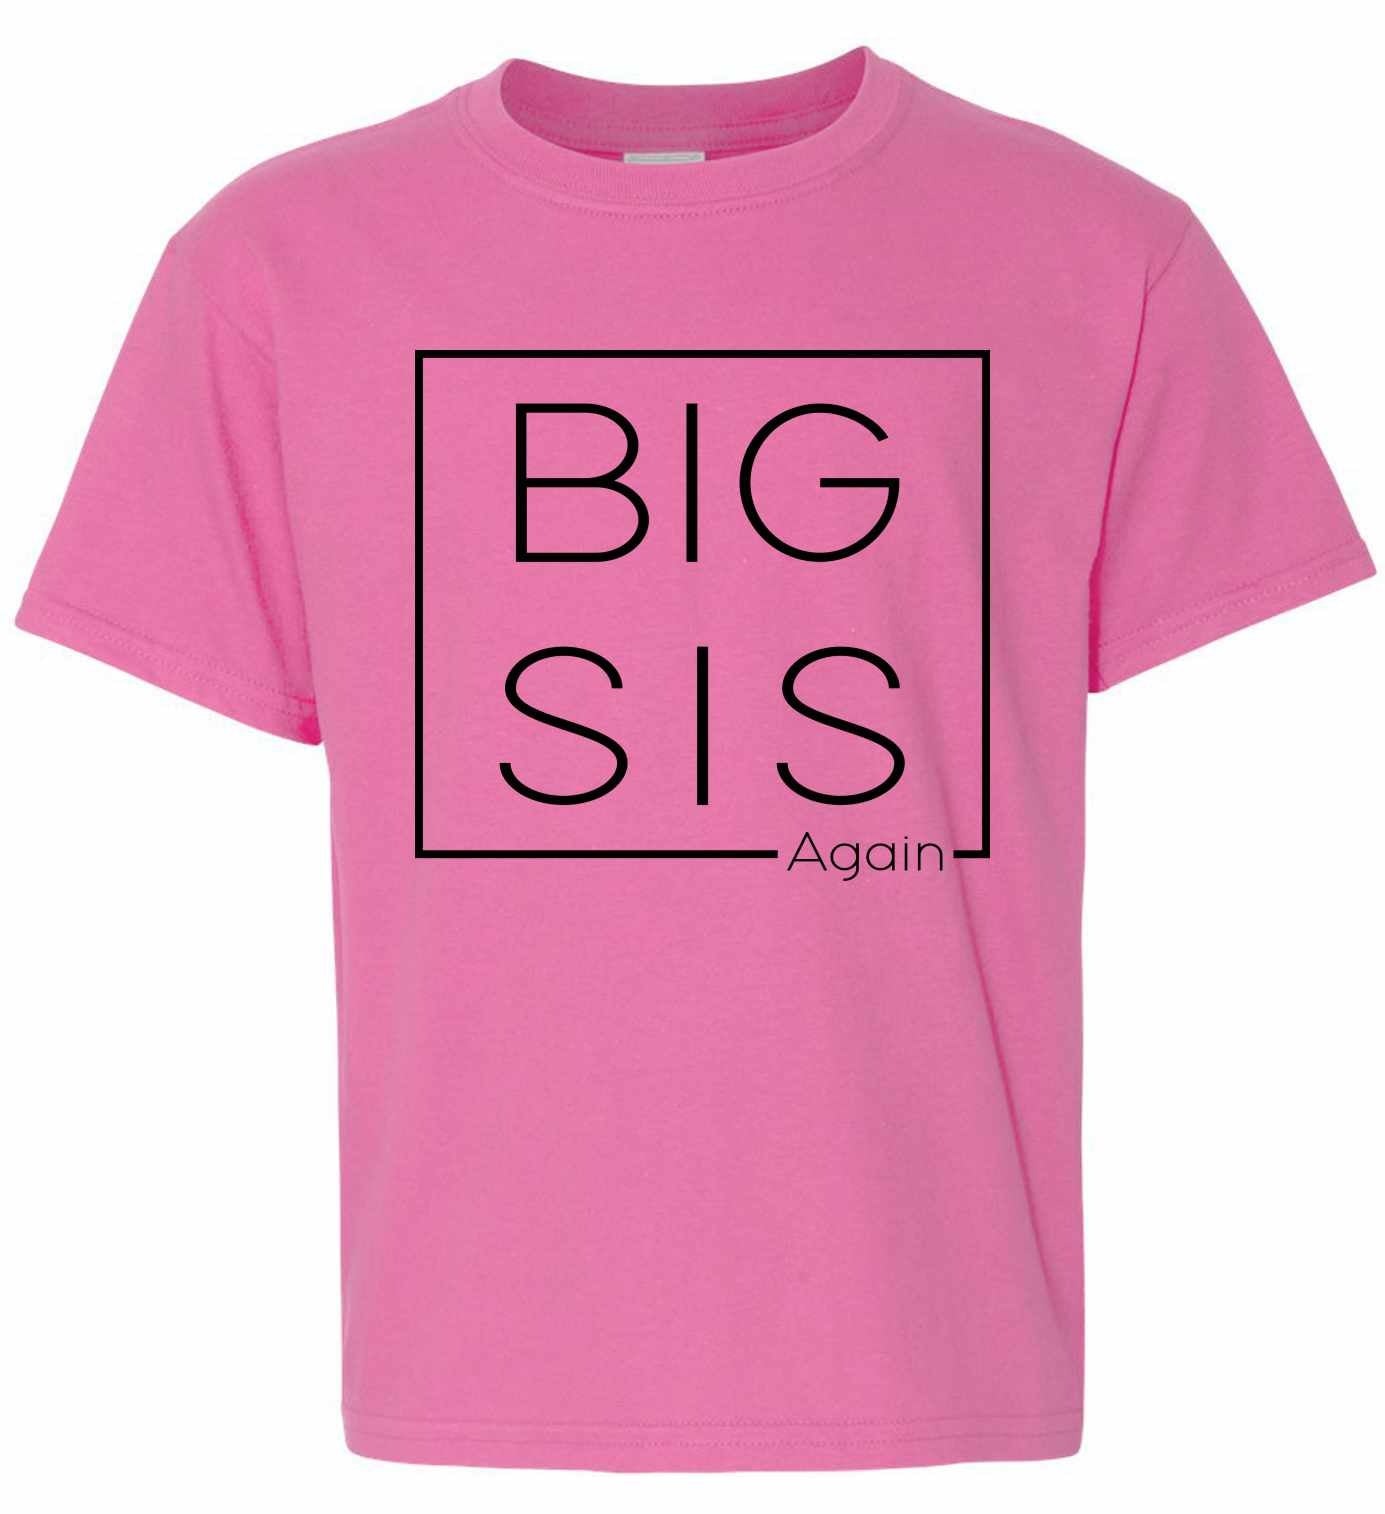 Big Sis Again - Big Sister Boxed on Kids T-Shirt (#1312-201)